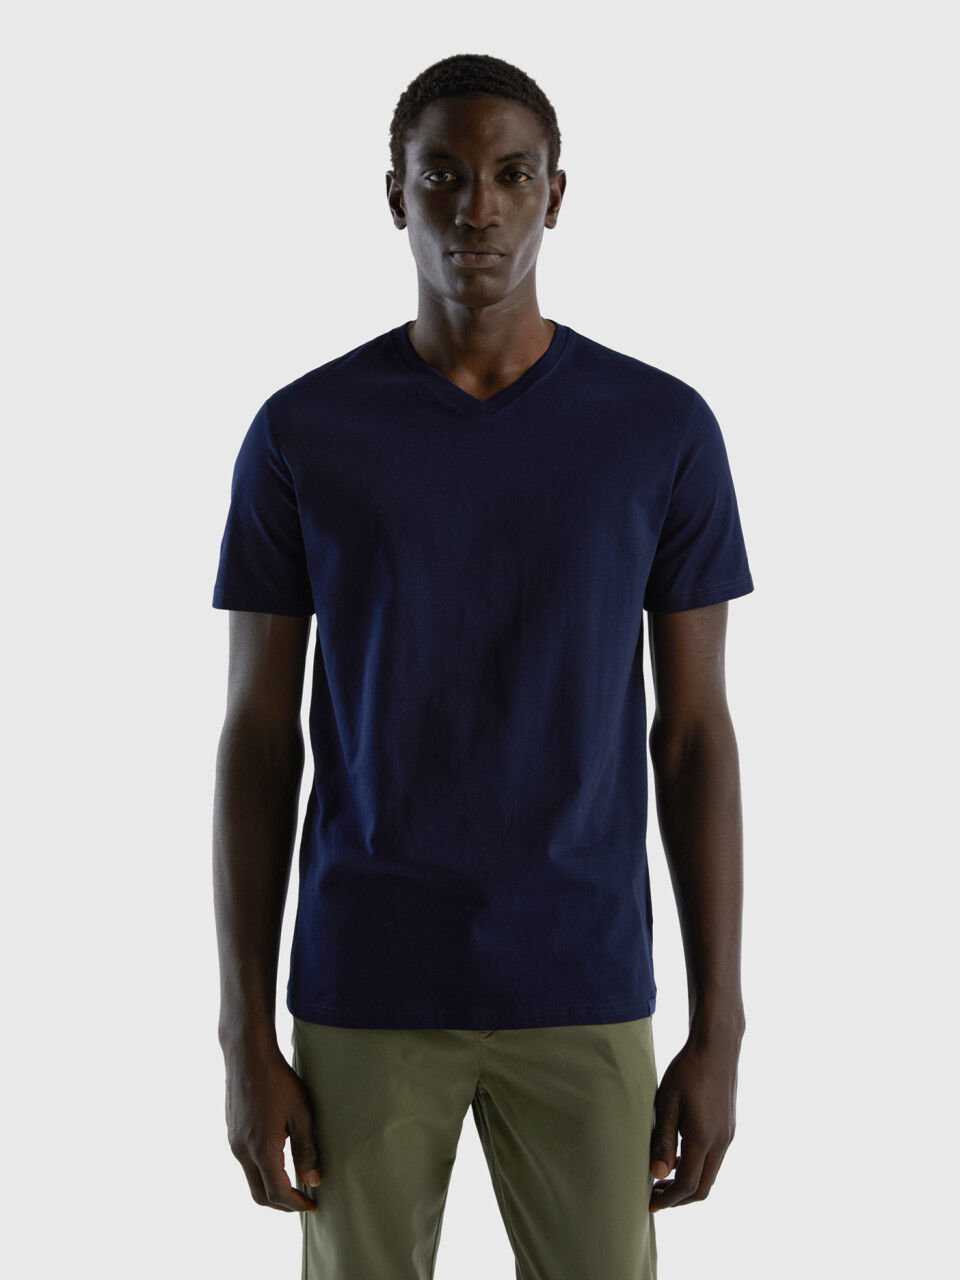 T-shirt in long fiber cotton